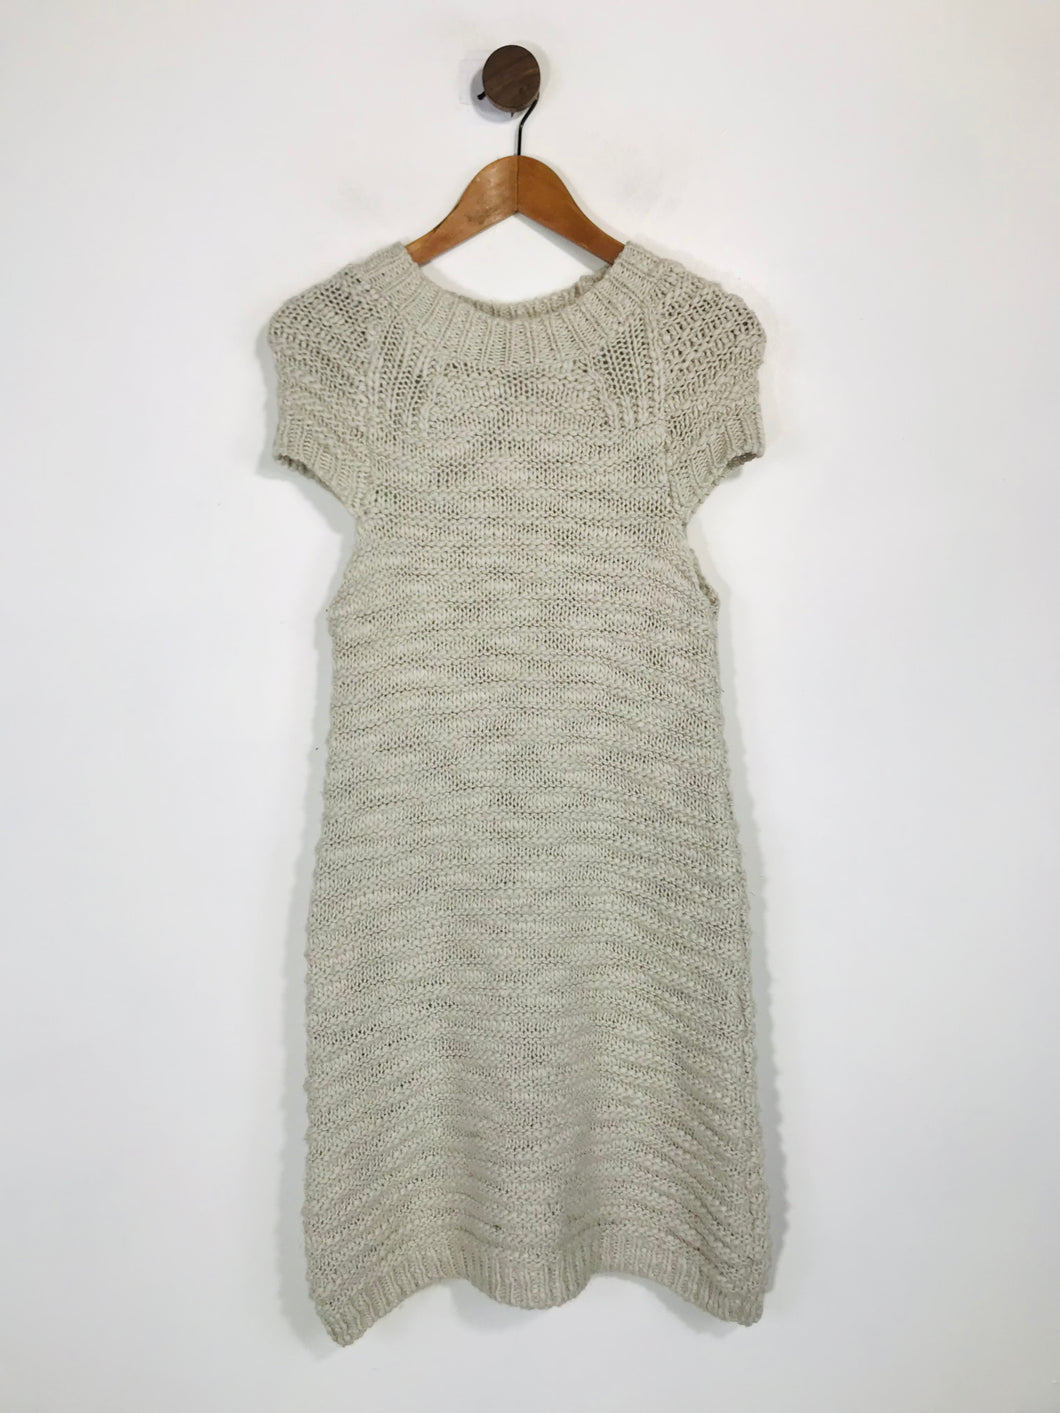 Zara Women's Wool Knit Sheath Dress | M UK10-12 | White